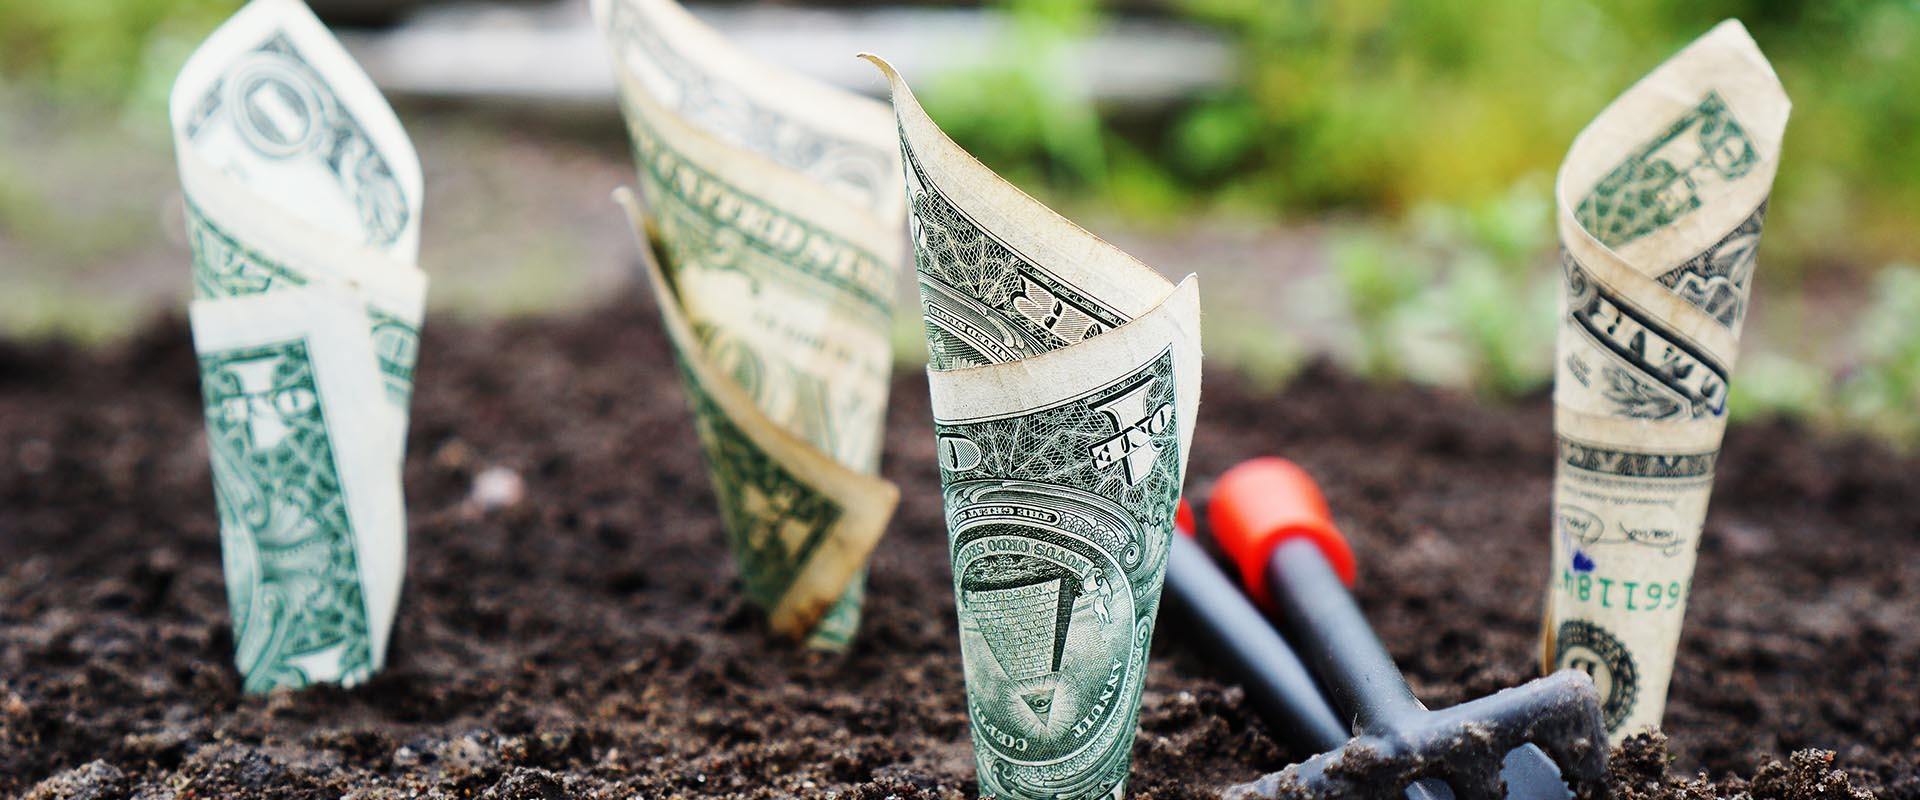 Microgreens Business: How To Grow Microgreens For Profit